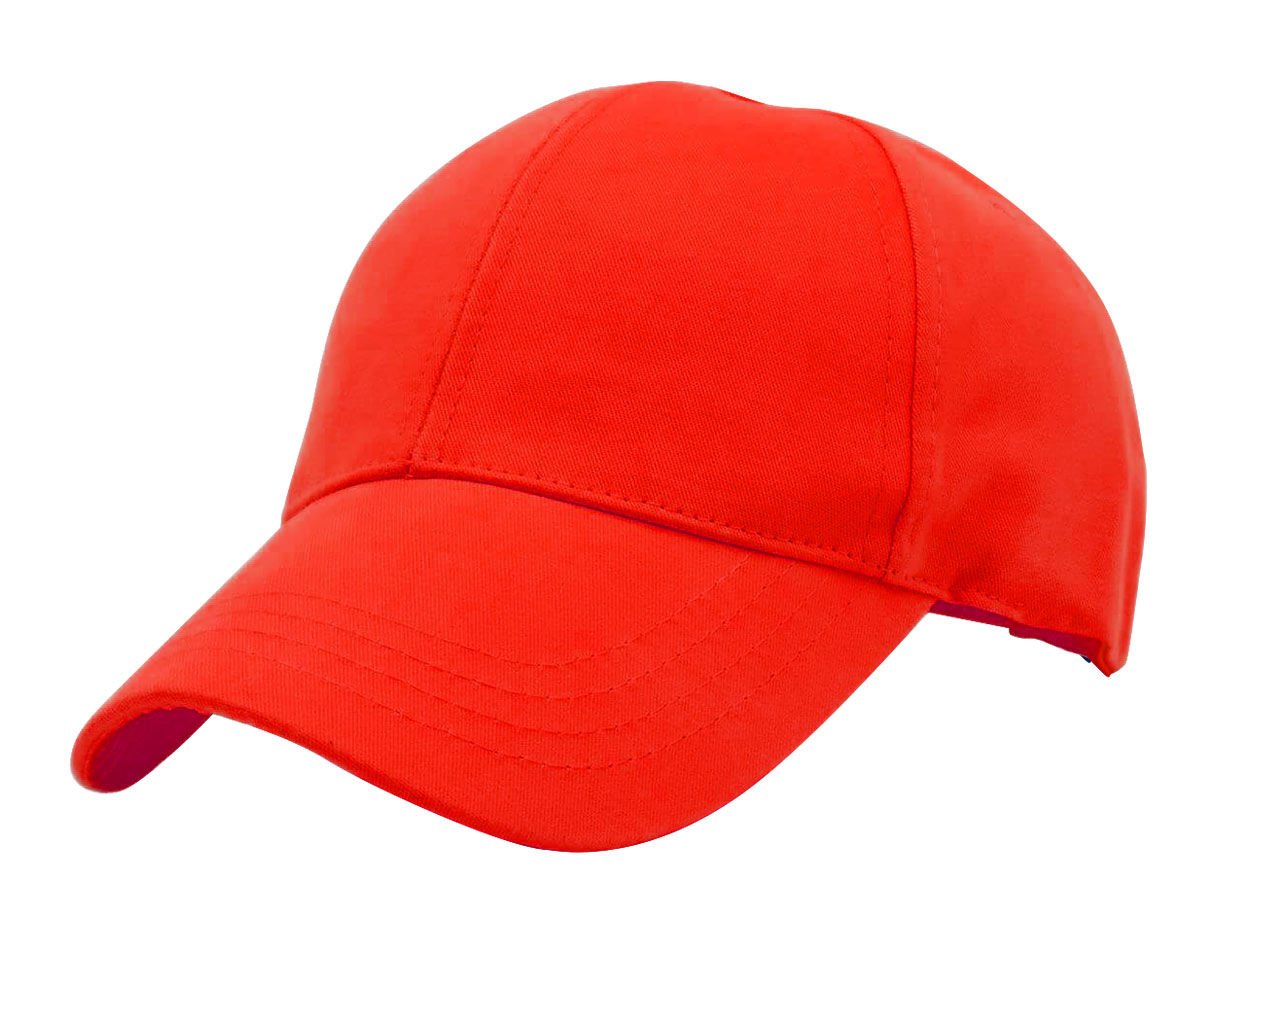 BAYMAX TABCAP Kışlık Helmet Kırmızı Şapka Baret BX-6010